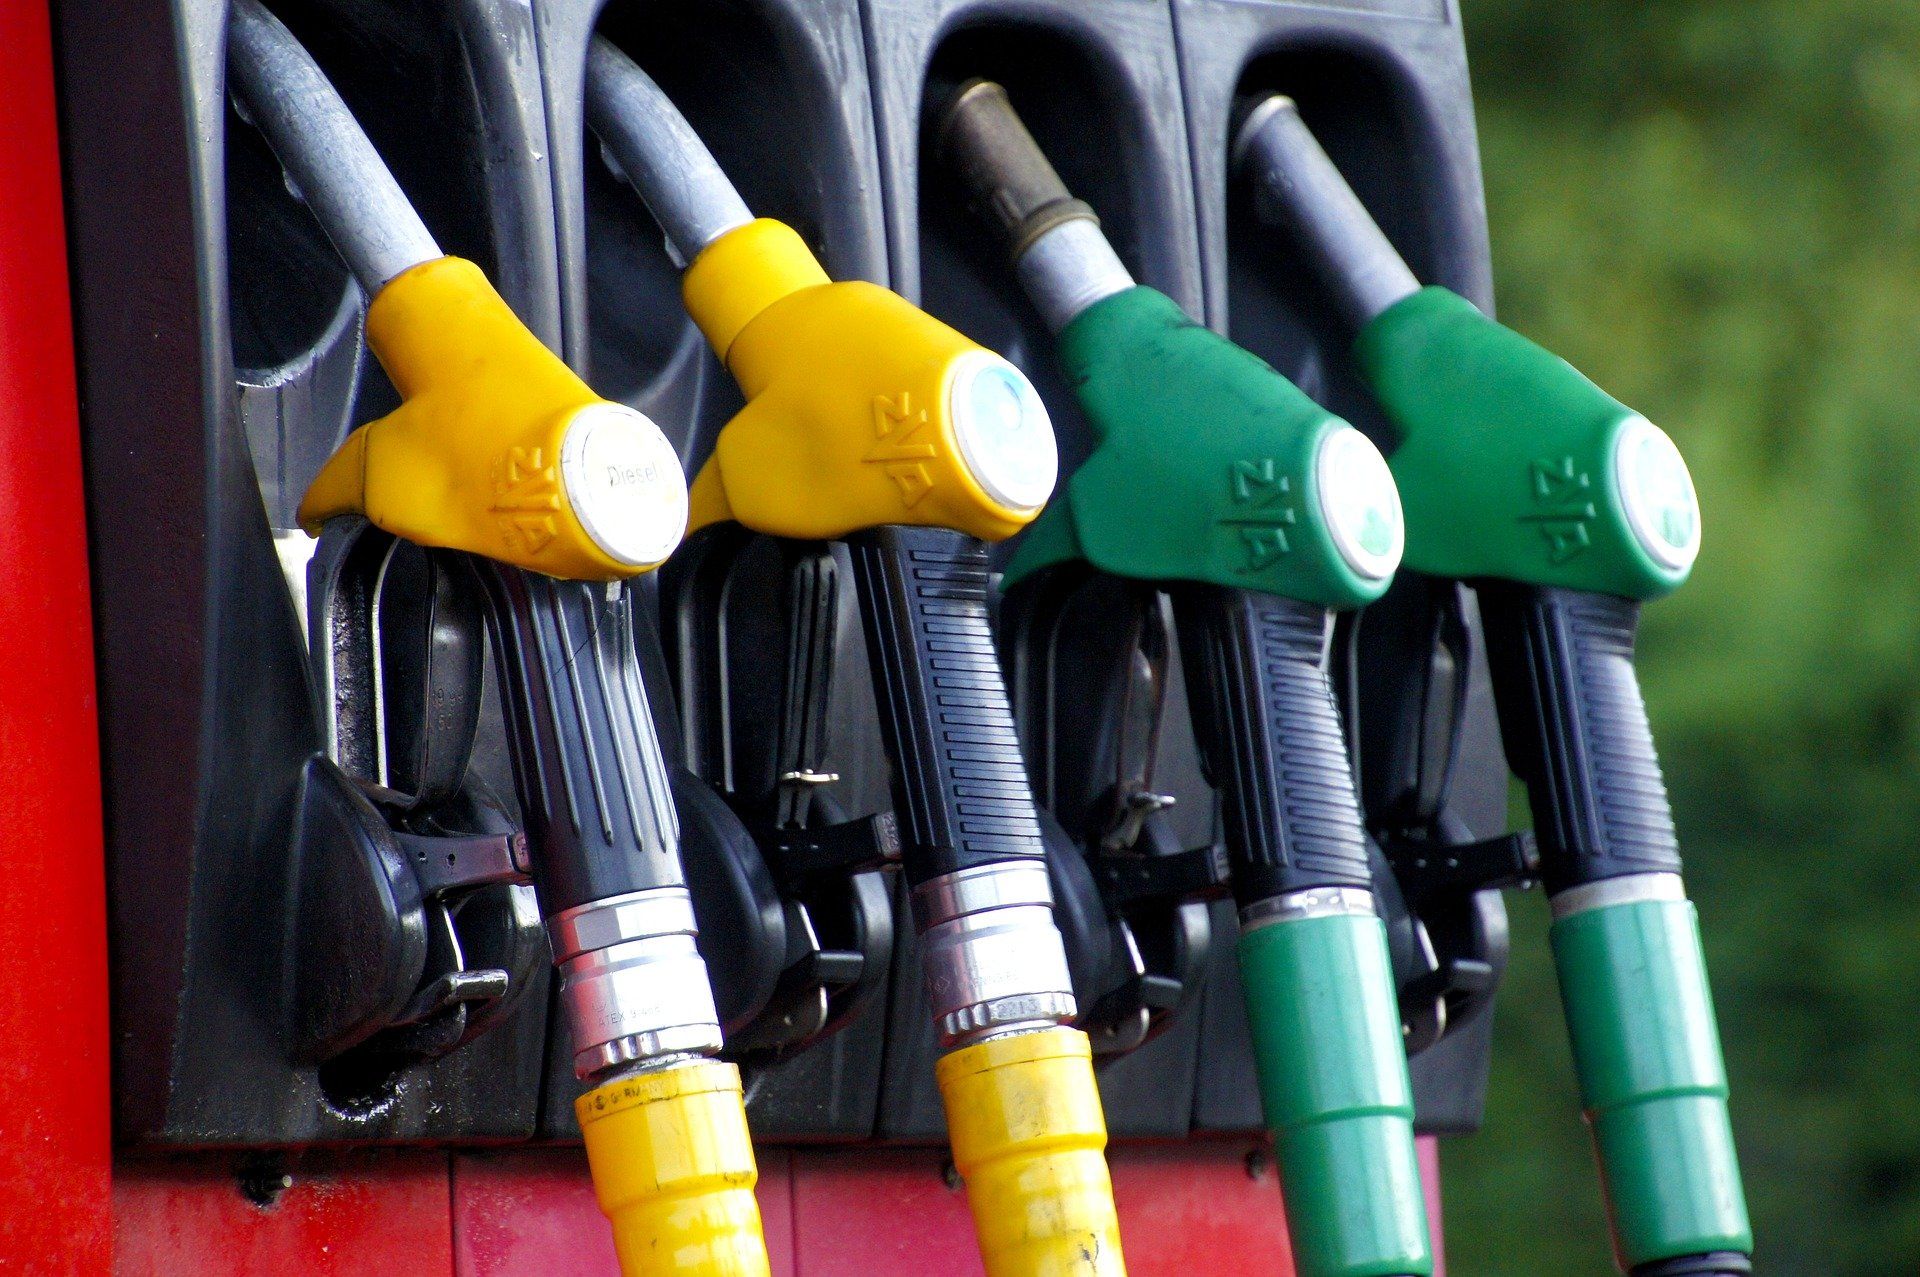 Fuel price hike: India sees fourth hike in diesel, petrol prices in a week